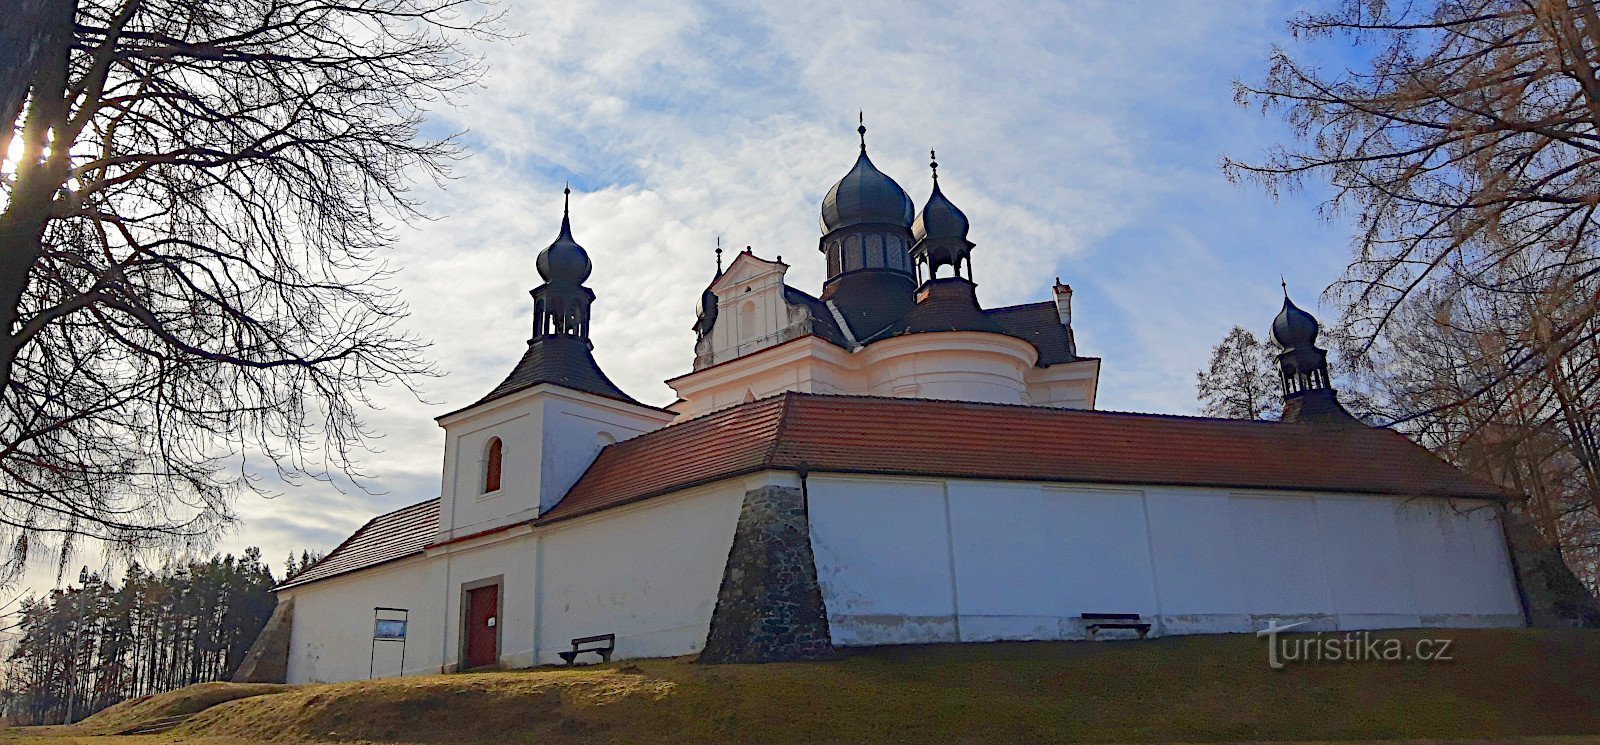 Trhové Sviny - προσκύνημα μπαρόκ Εκκλησία της Αγίας Τριάδας